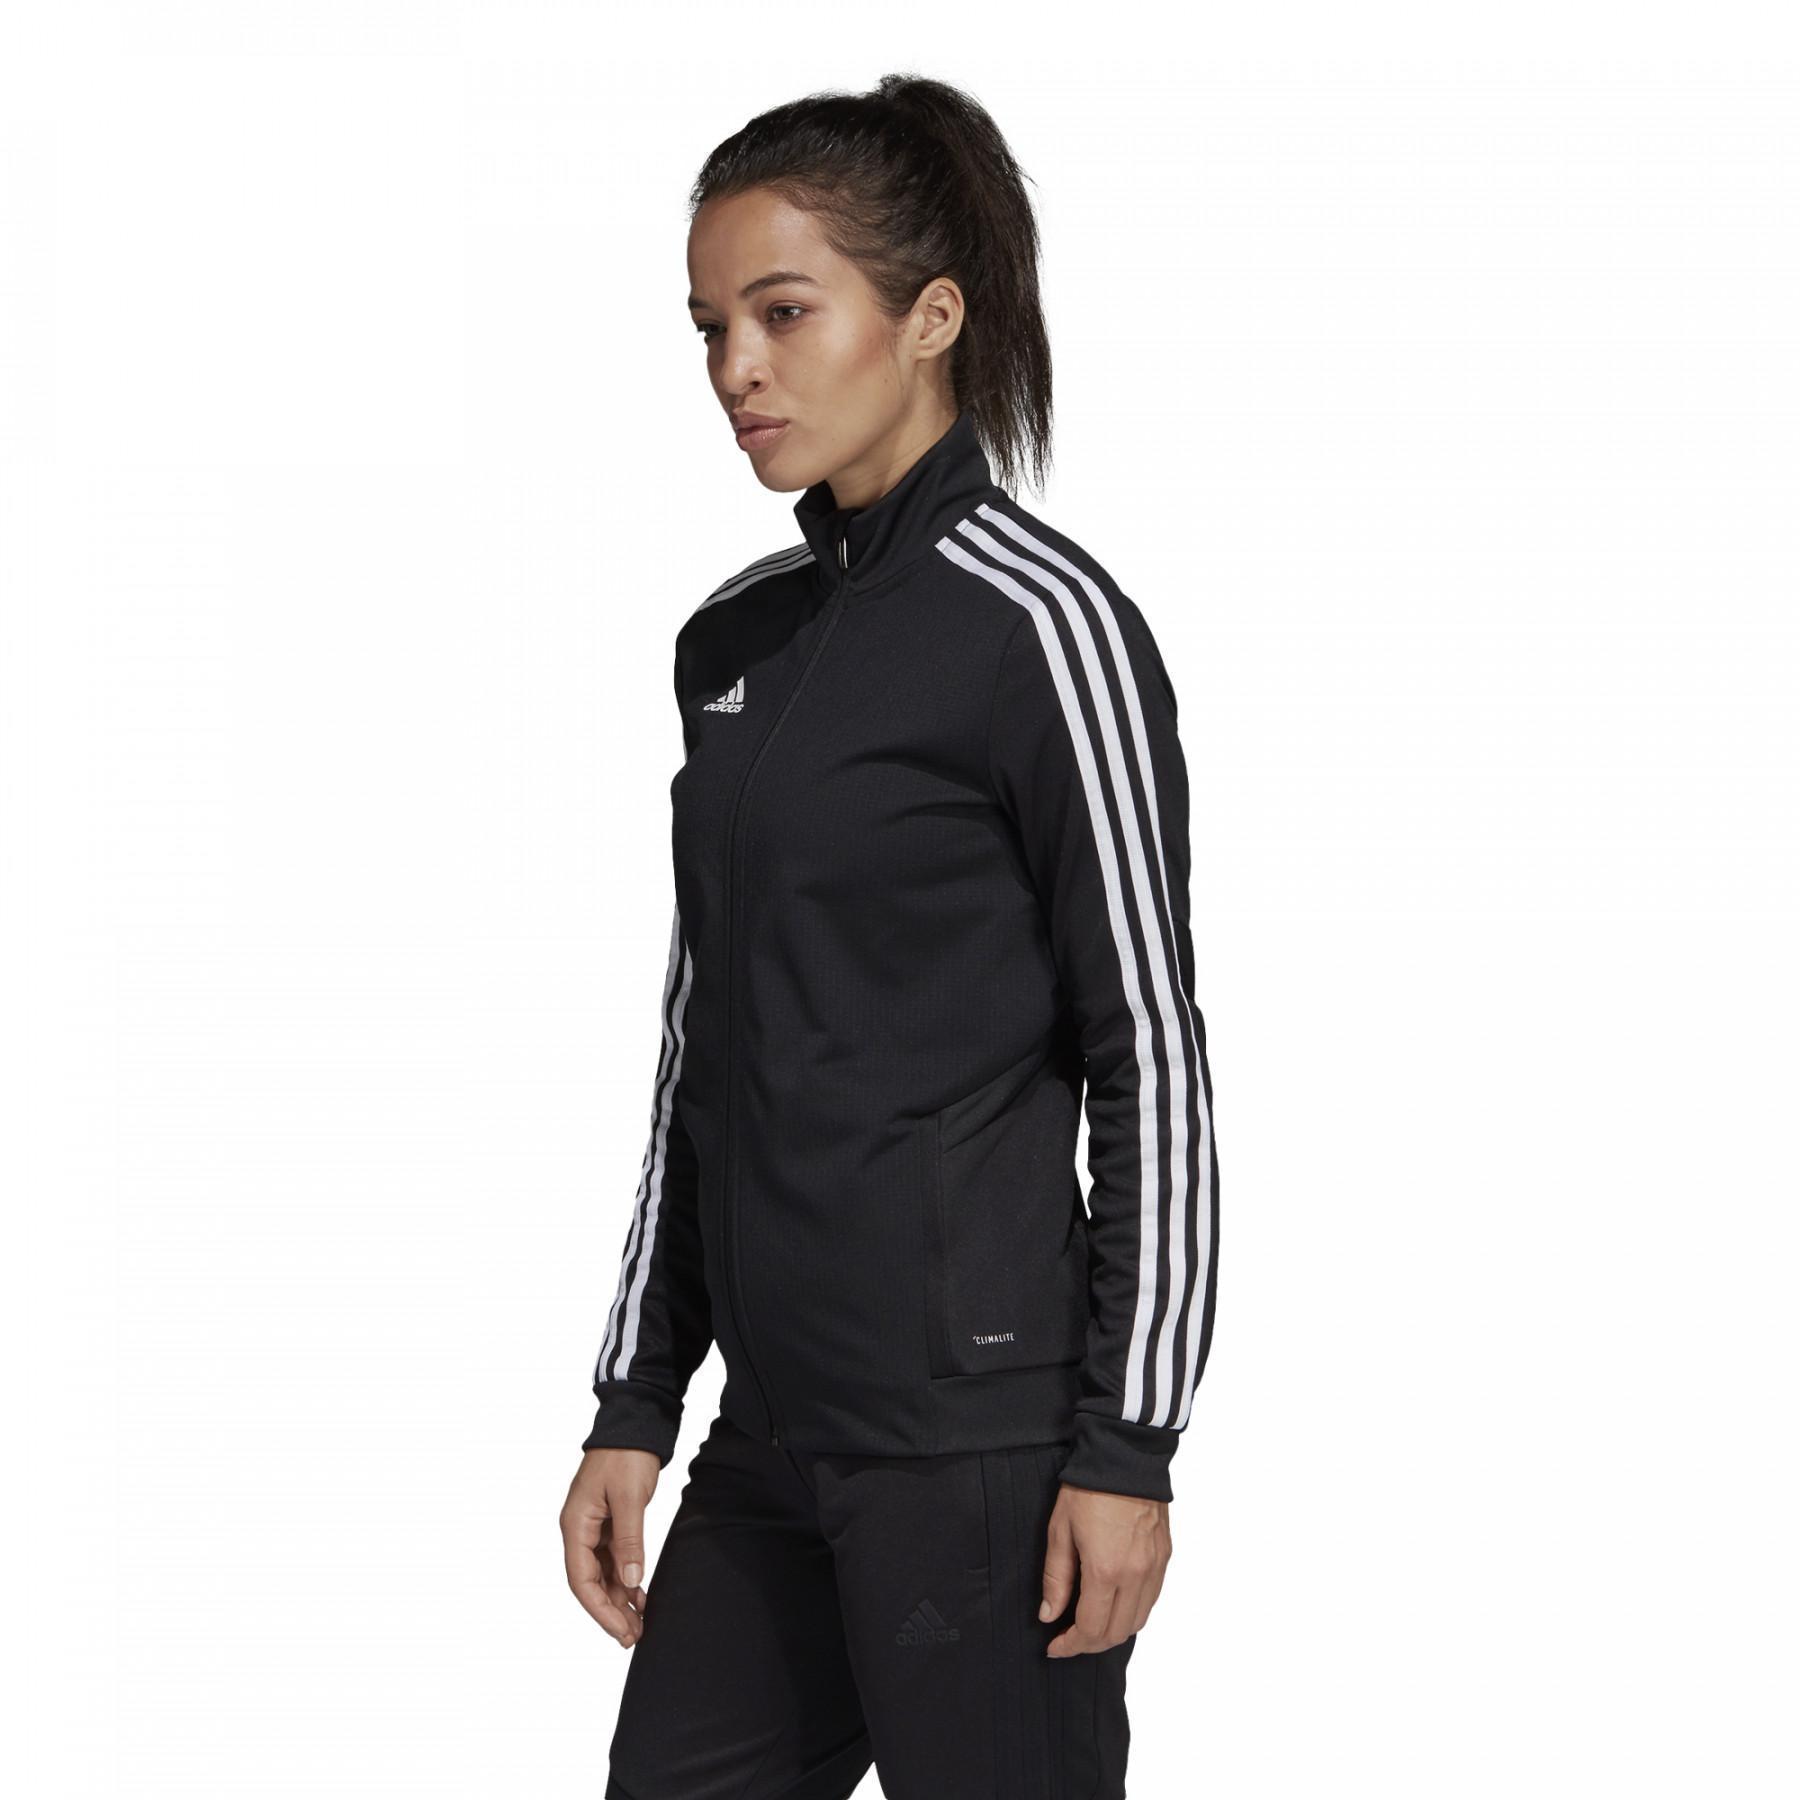 Women's training jacket adidas Tiro 19